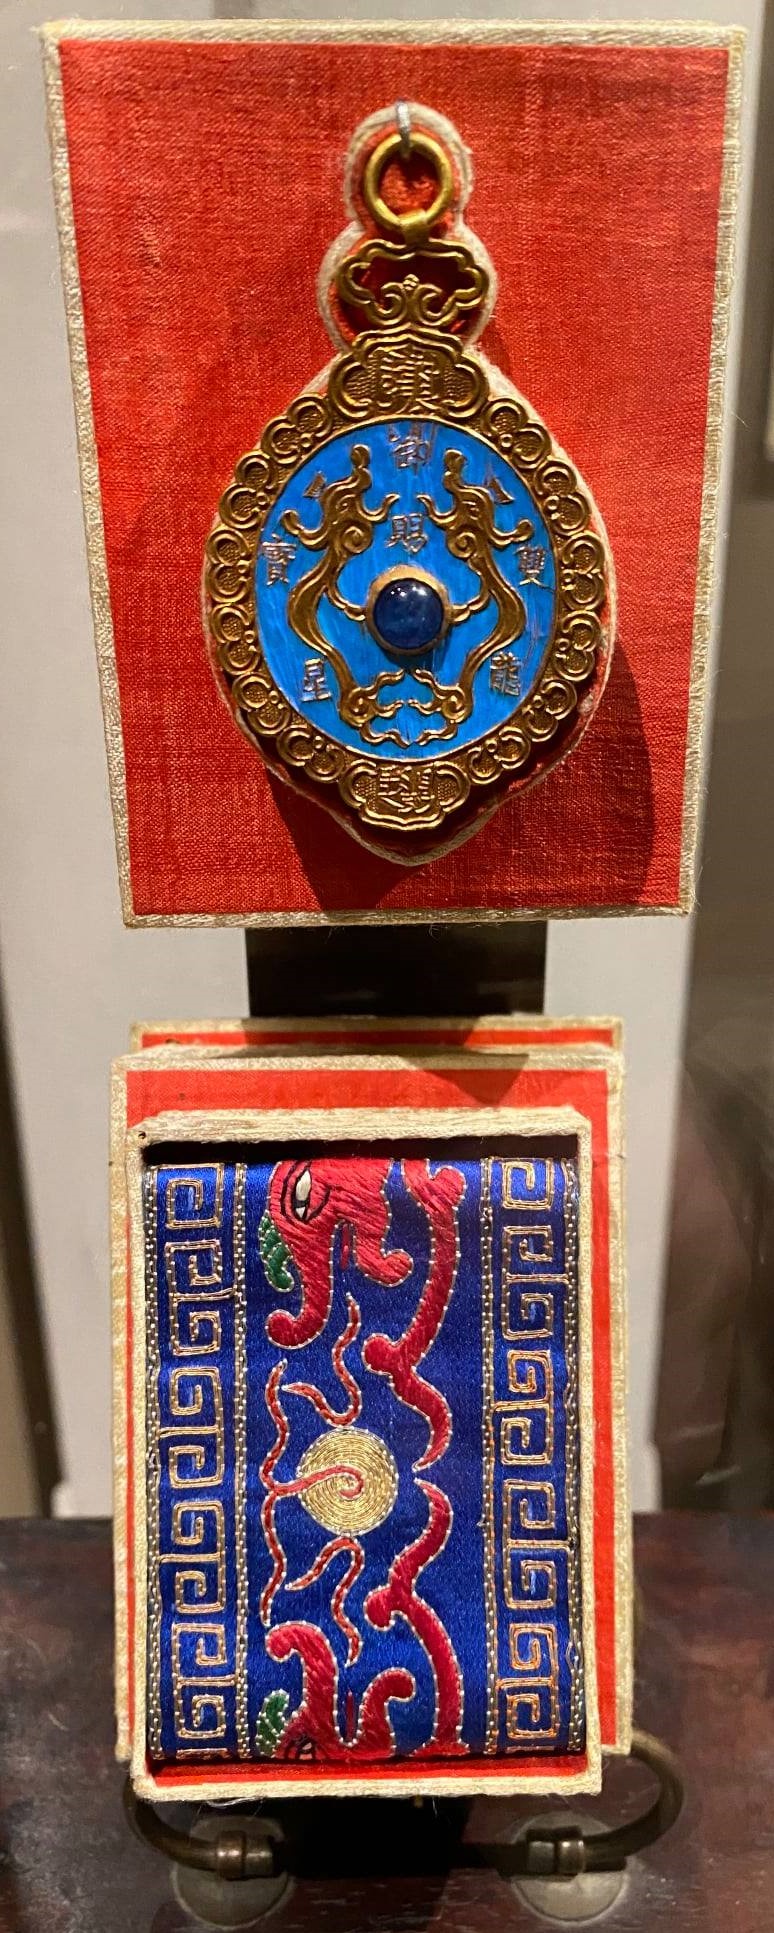 Orders of Double Dragon from the collection of Musée de la Légion d'honneur ..jpg